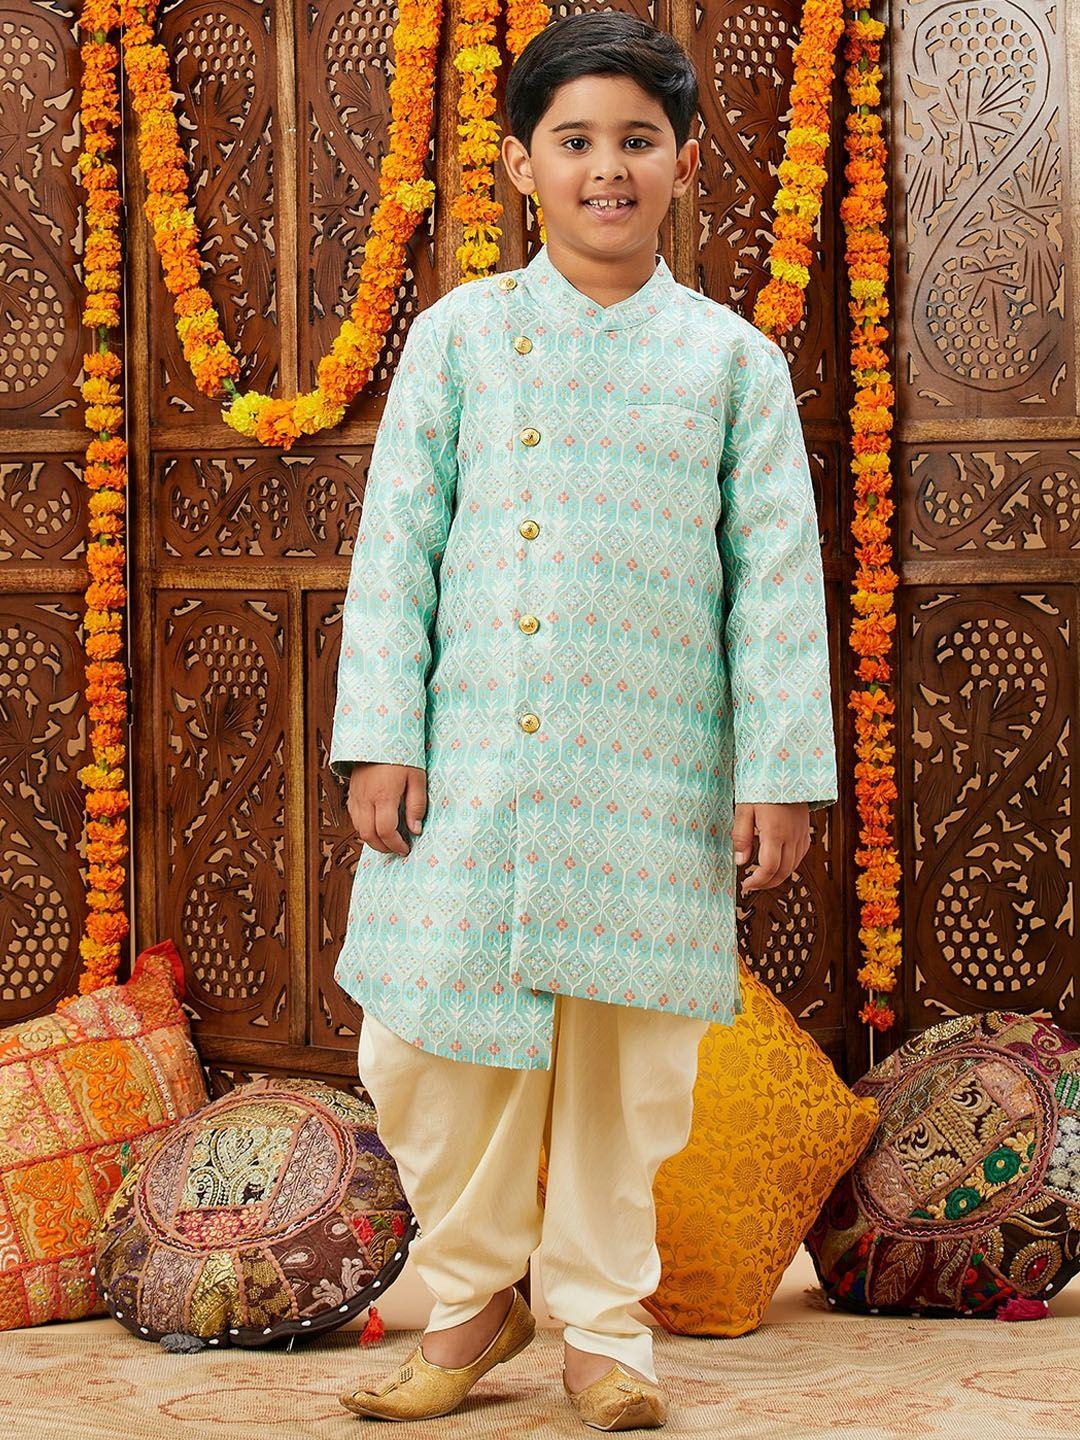 stylo-bug-boys-green-ethnic-motifs-embroidered-regular-kurta-with-dhoti-pants